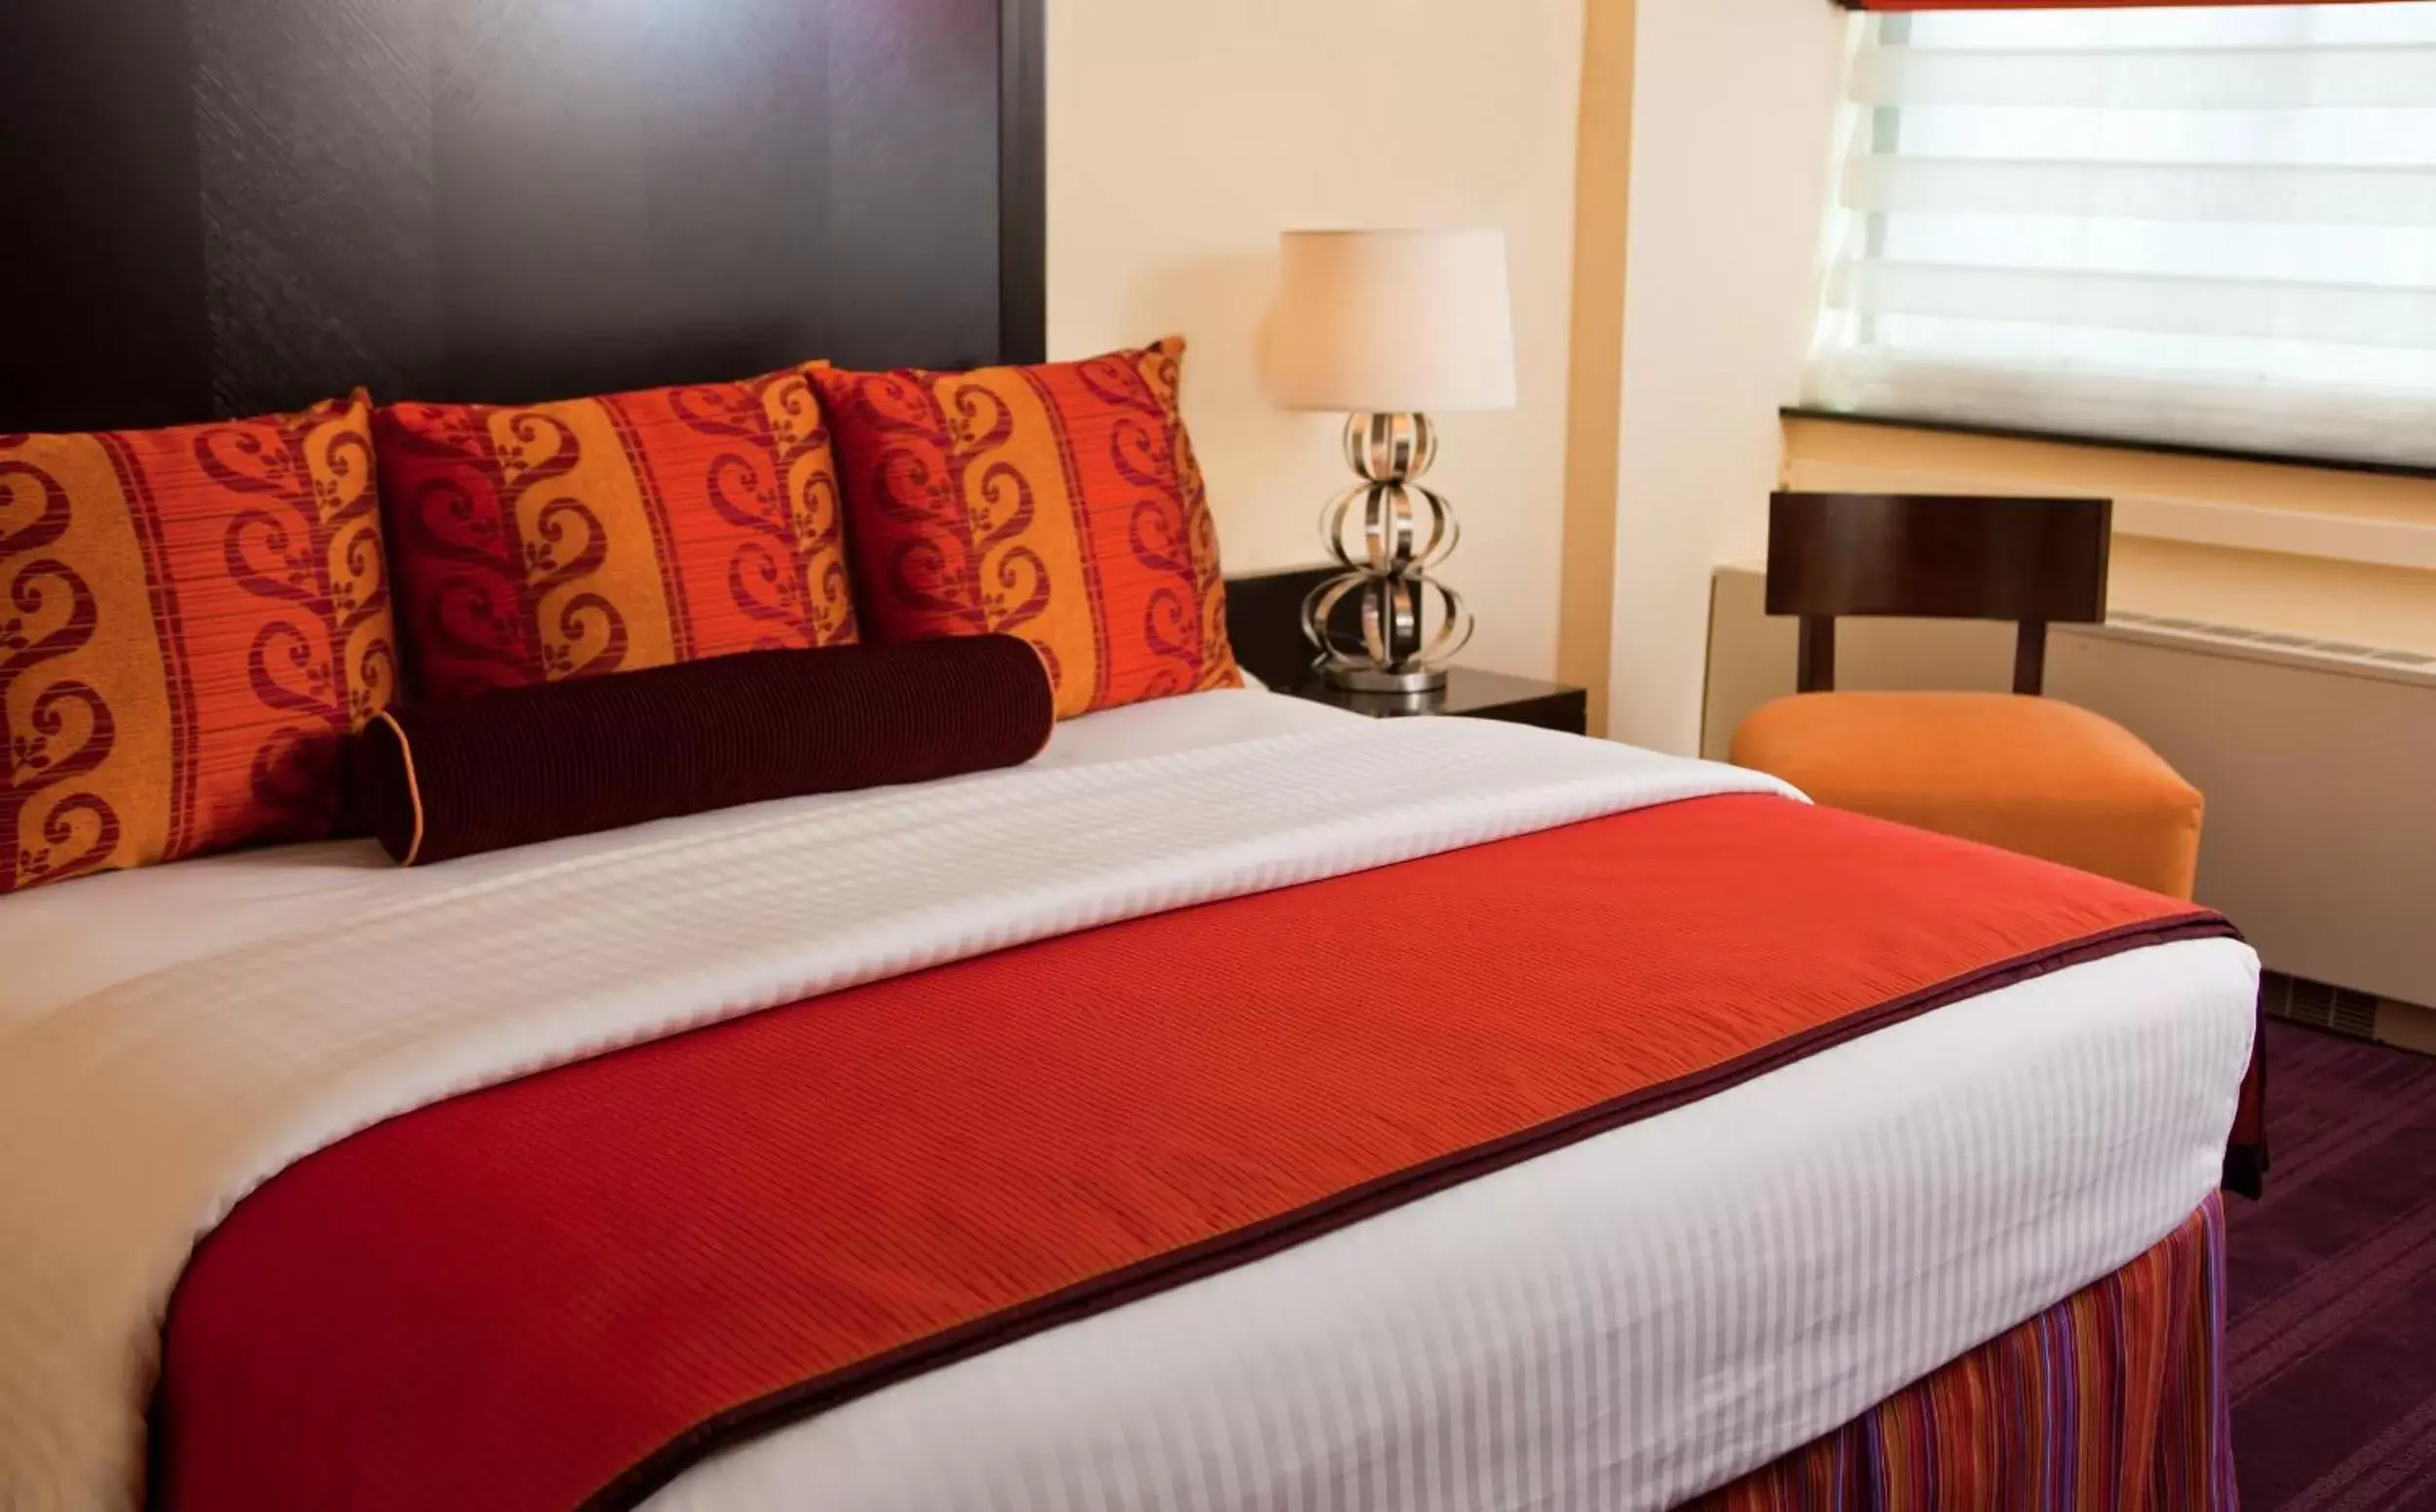 Bed in Washington Plaza Hotel